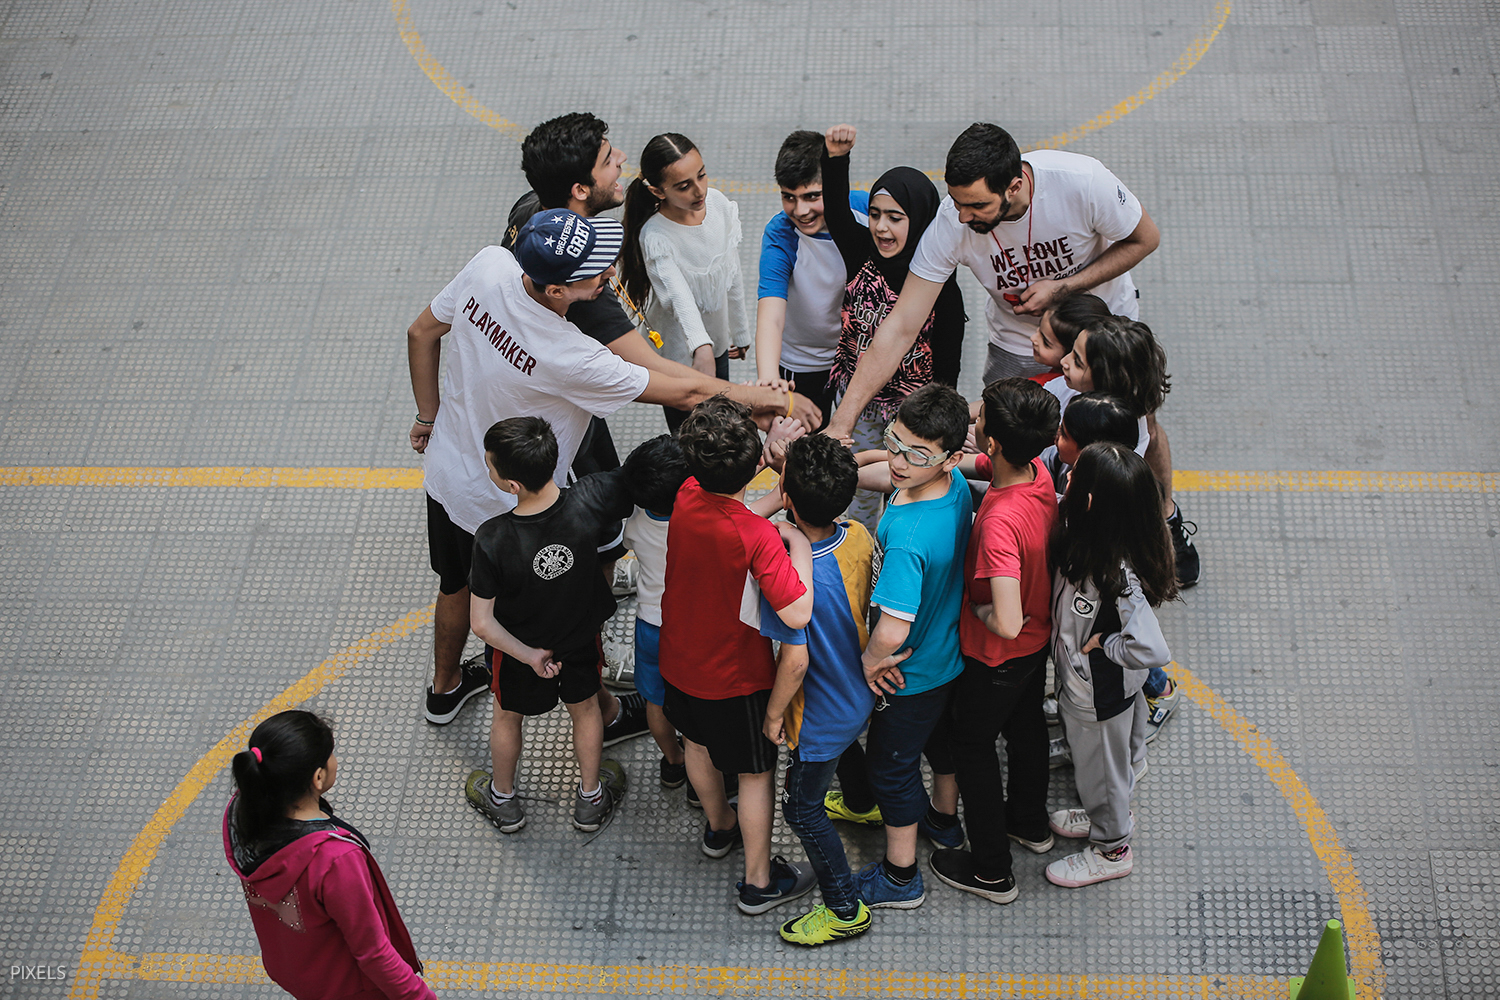 Entraînement hebdomadaire de basketball de rue à Aisha Bakkar Zone 2019 ©GAME Lebanon